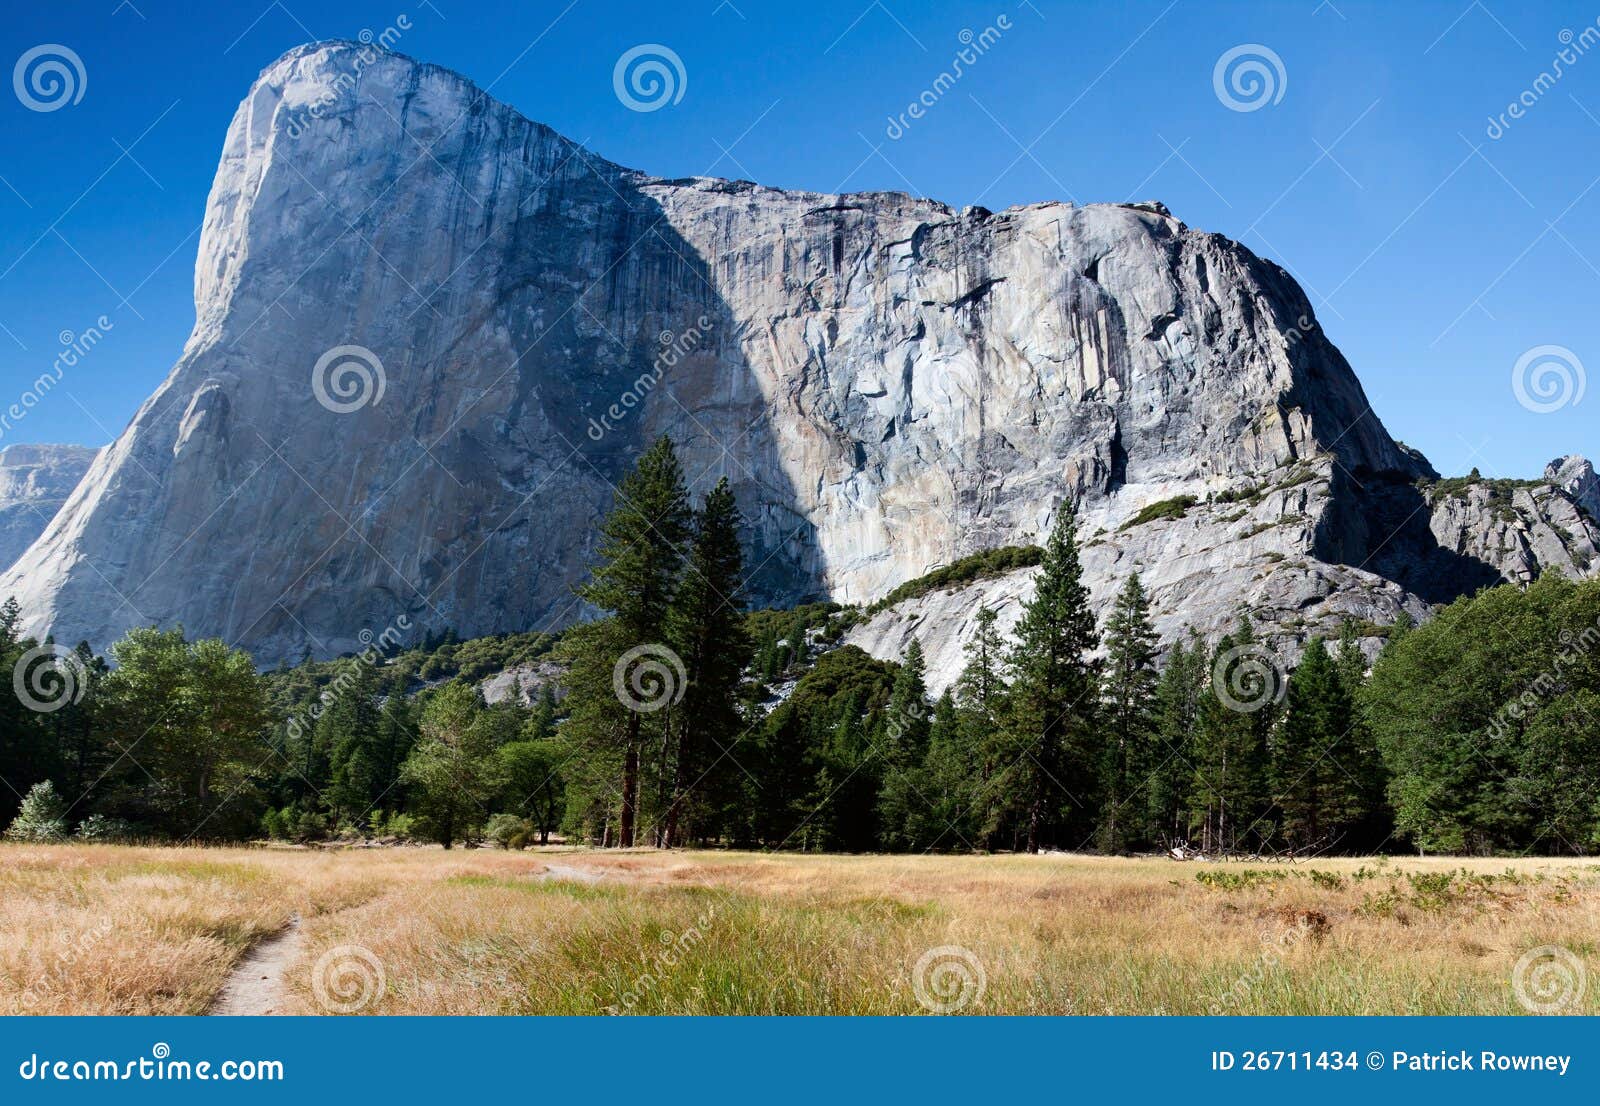 El Capitan Mountain Yosemite Stock Photo Image Of National Mountains